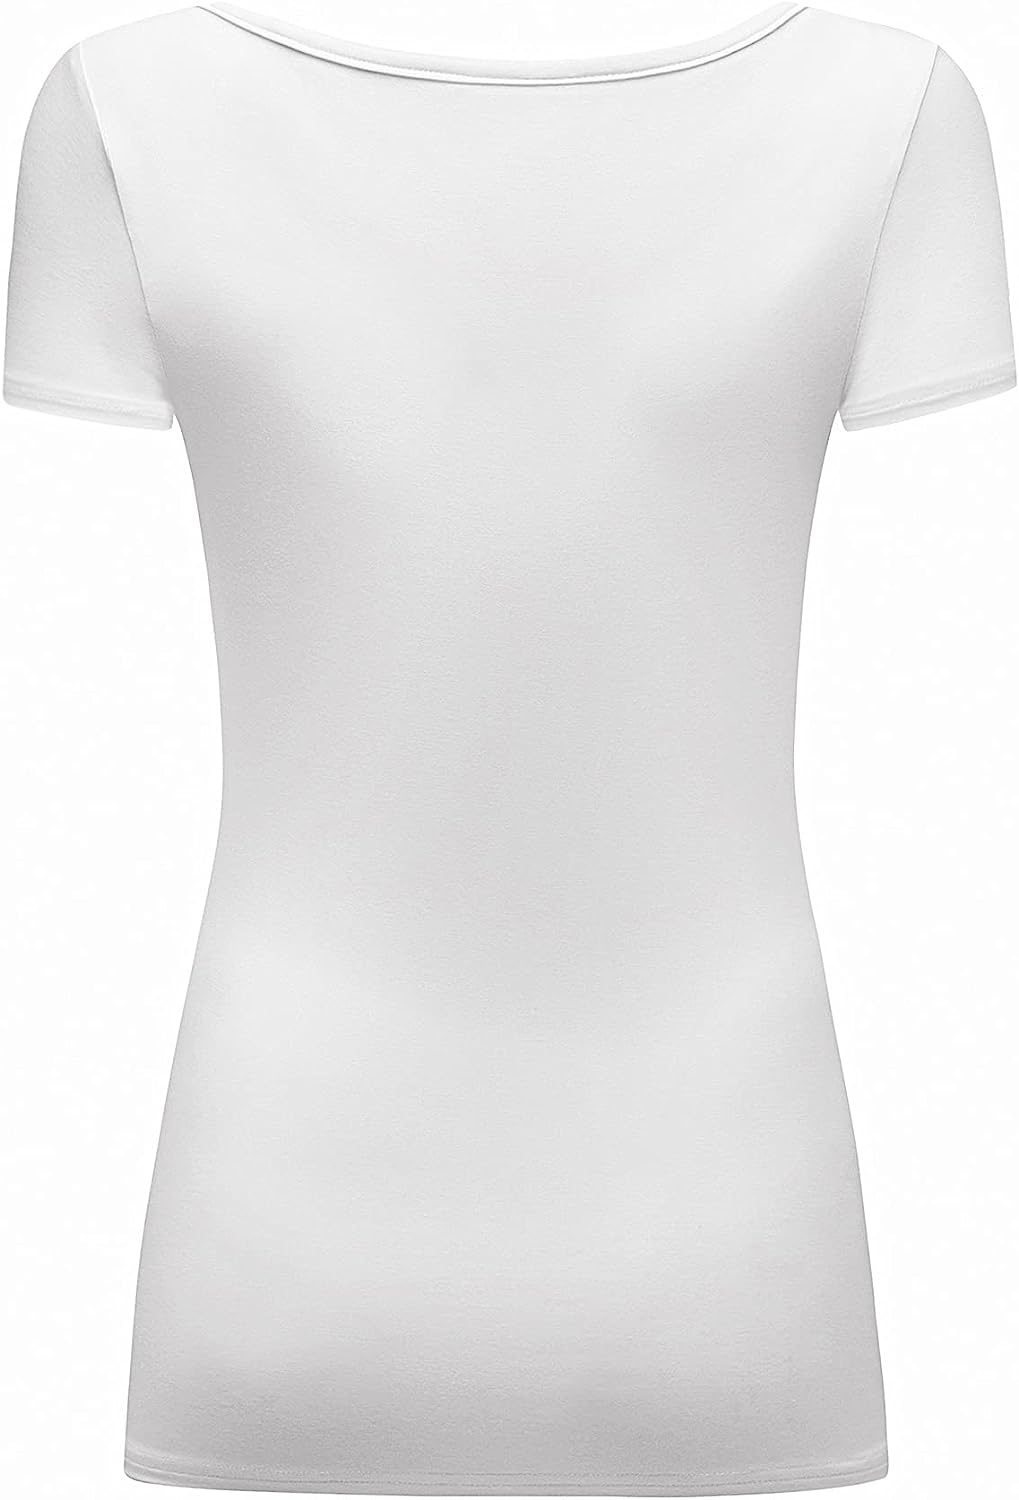 OThread & Co. Women's Short Sleeve T-Shirt Scoop Neck Basic Layer Stretchy Shirts